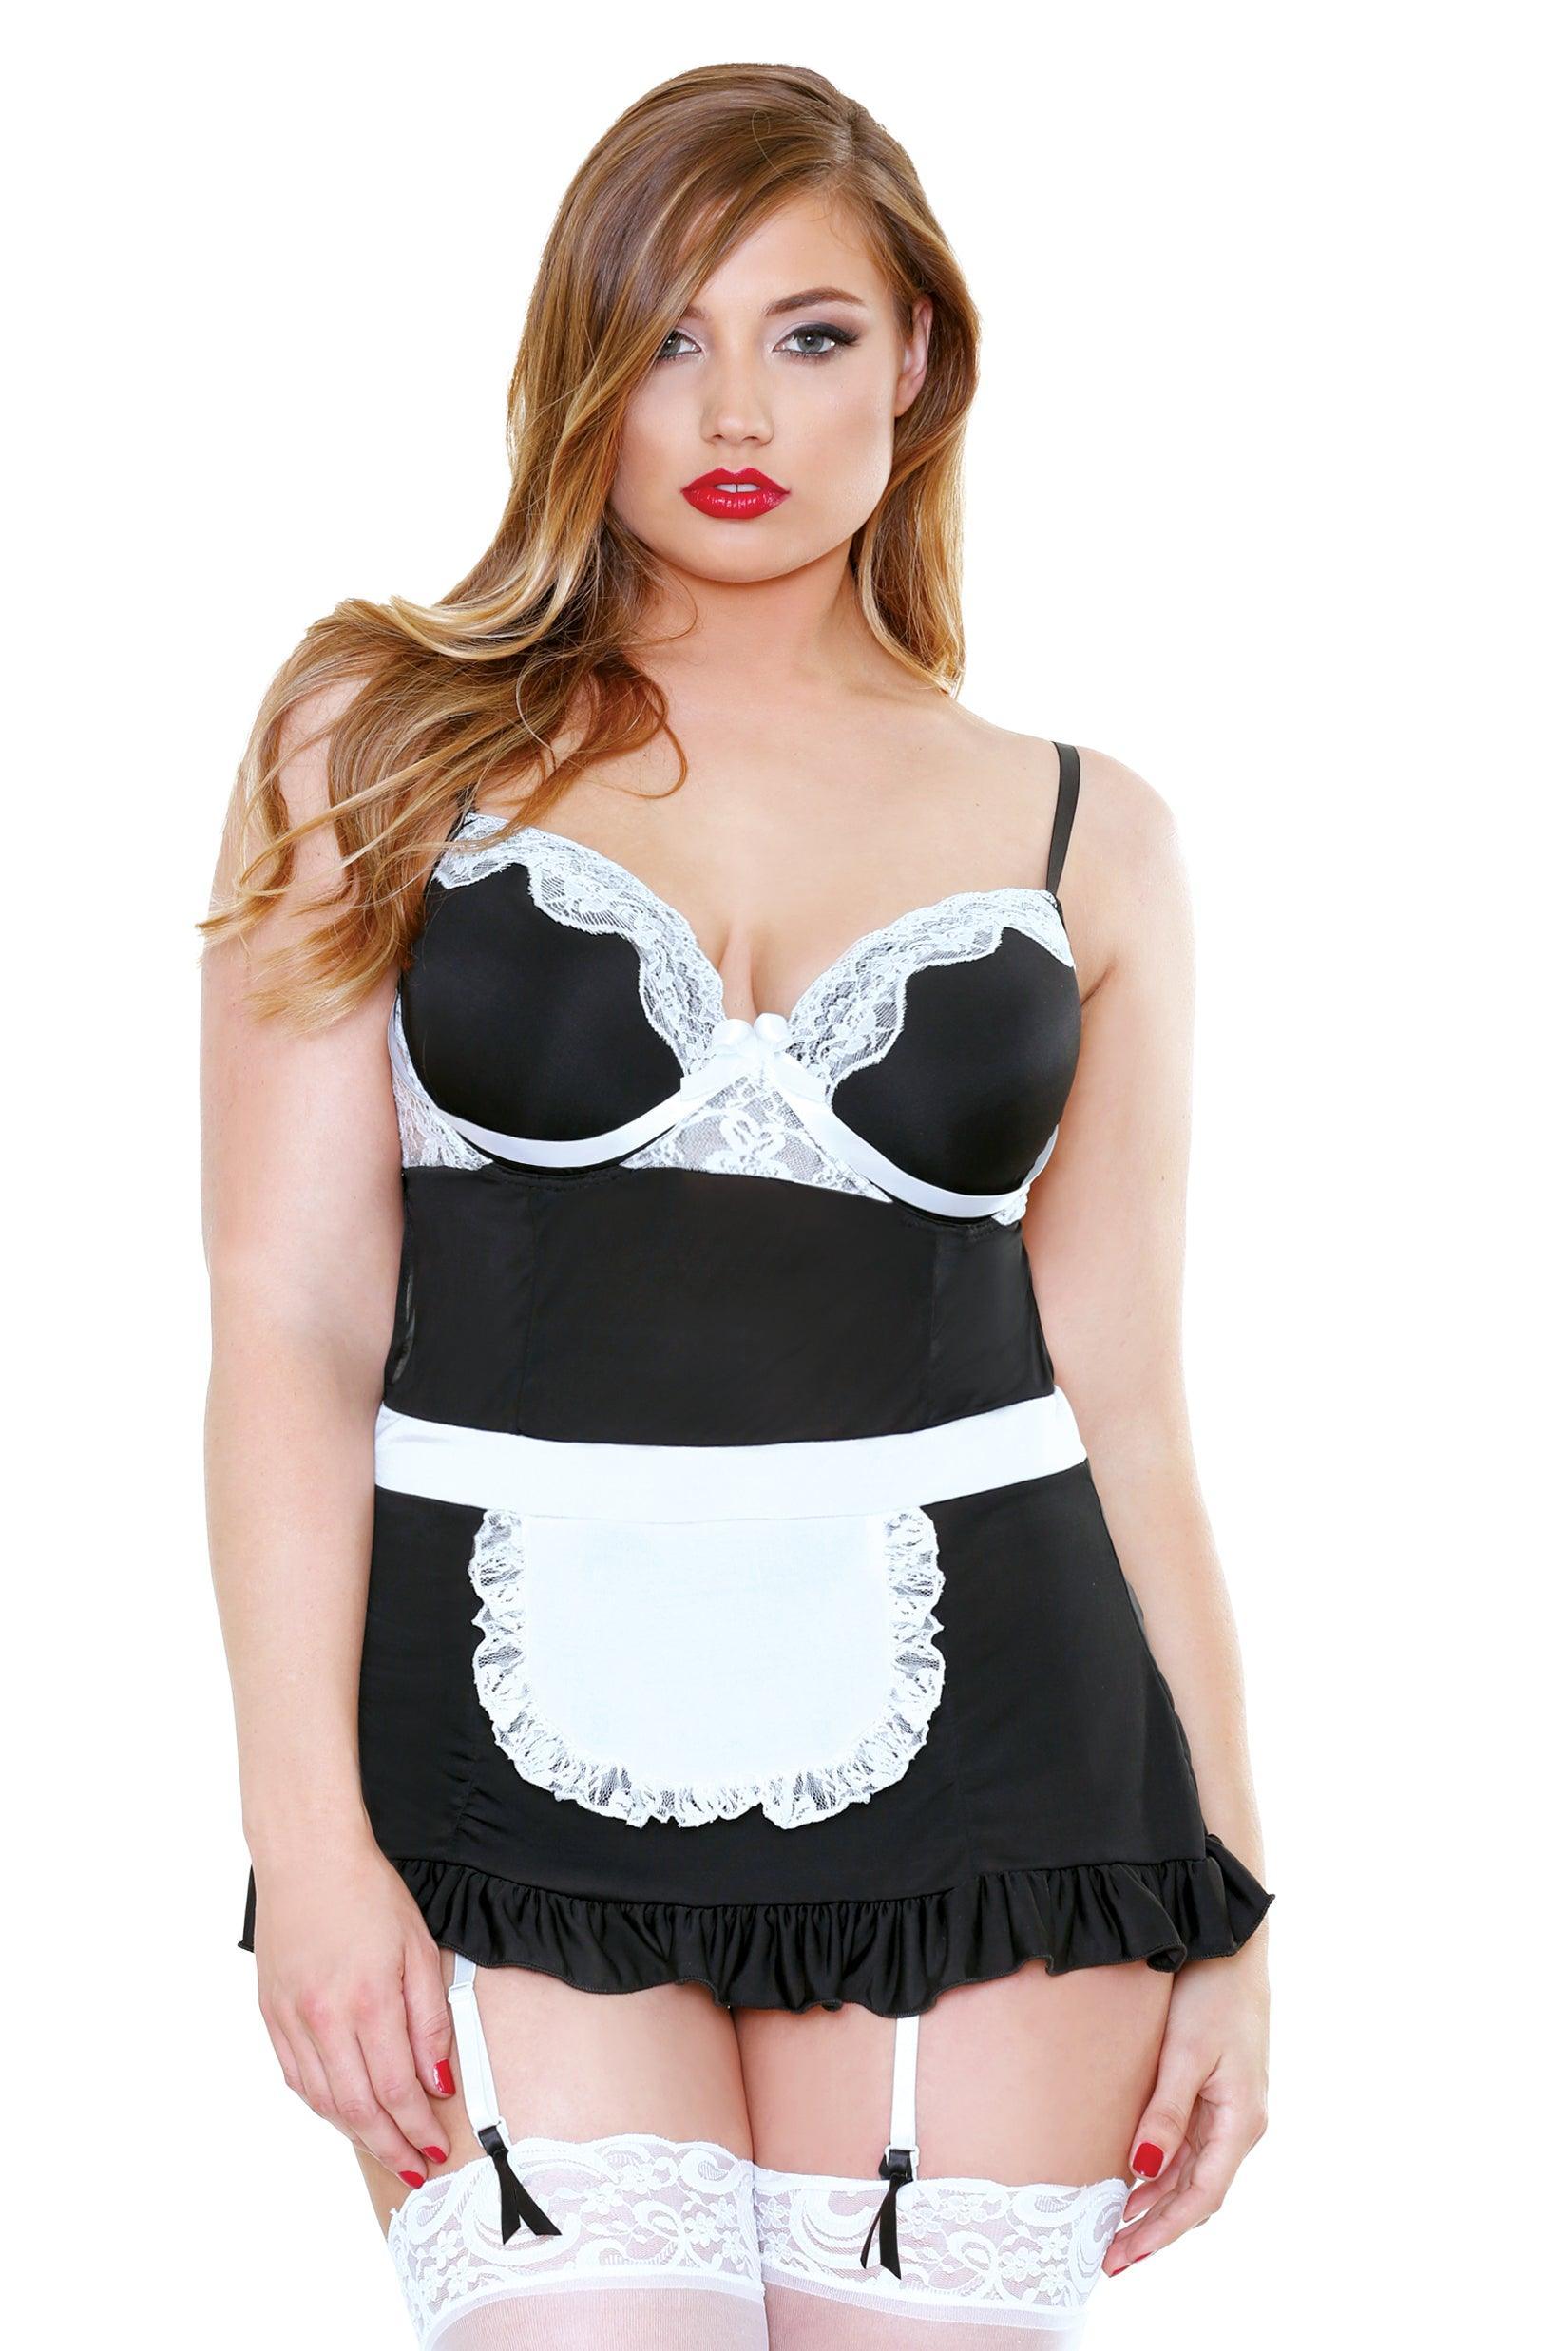 Night Service Maid Costume - 3x-4x - Black and White - My Sex Toy Hub